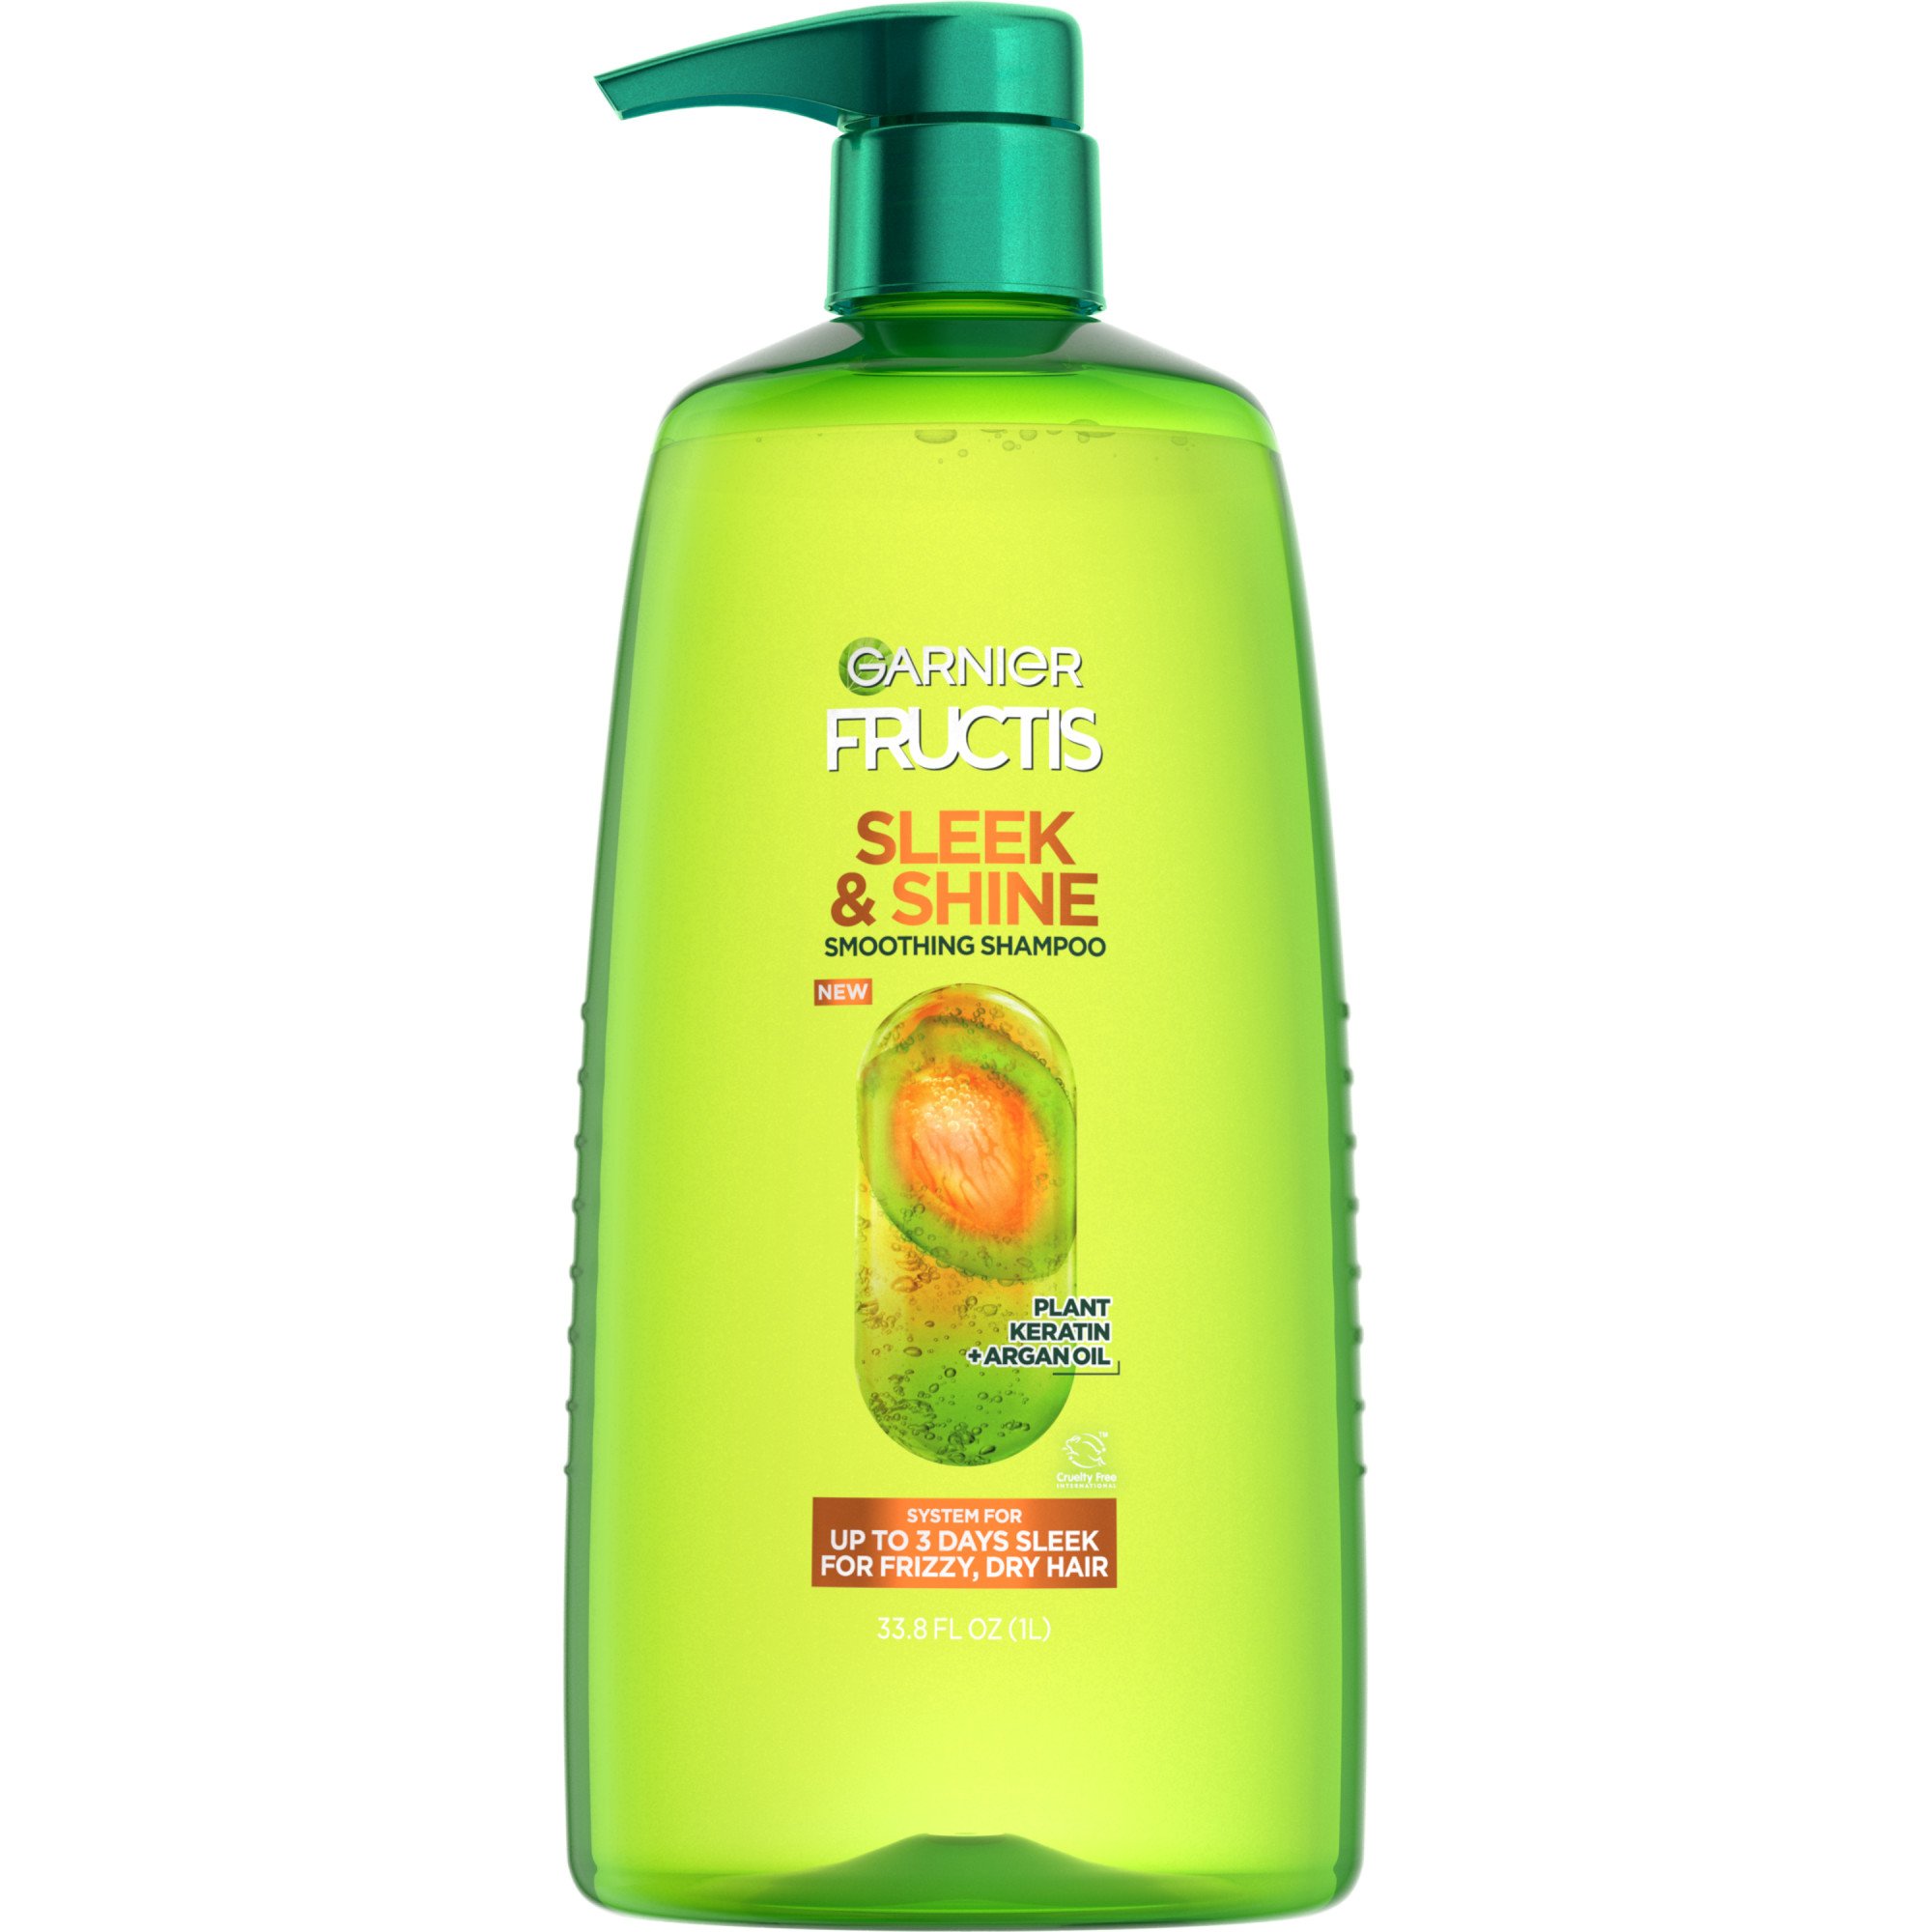 auditie Tegenstrijdigheid stimuleren Garnier Fructis Sleek & Shine Smoothing Shampoo - Shop Hair Care at H-E-B